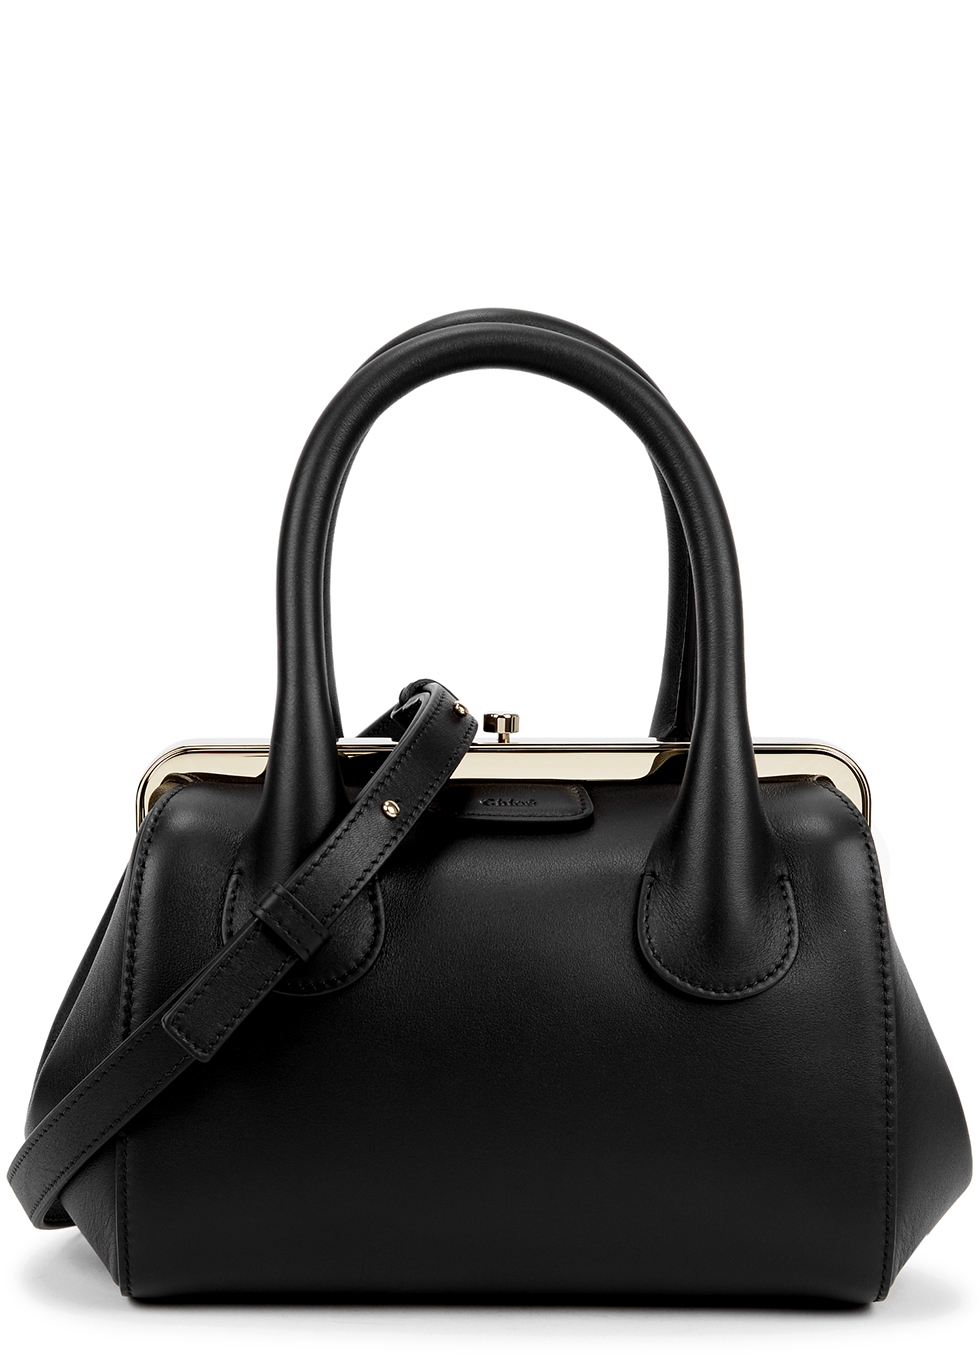 Chloé Joyce small black leather top handle bag - Harvey Nichols